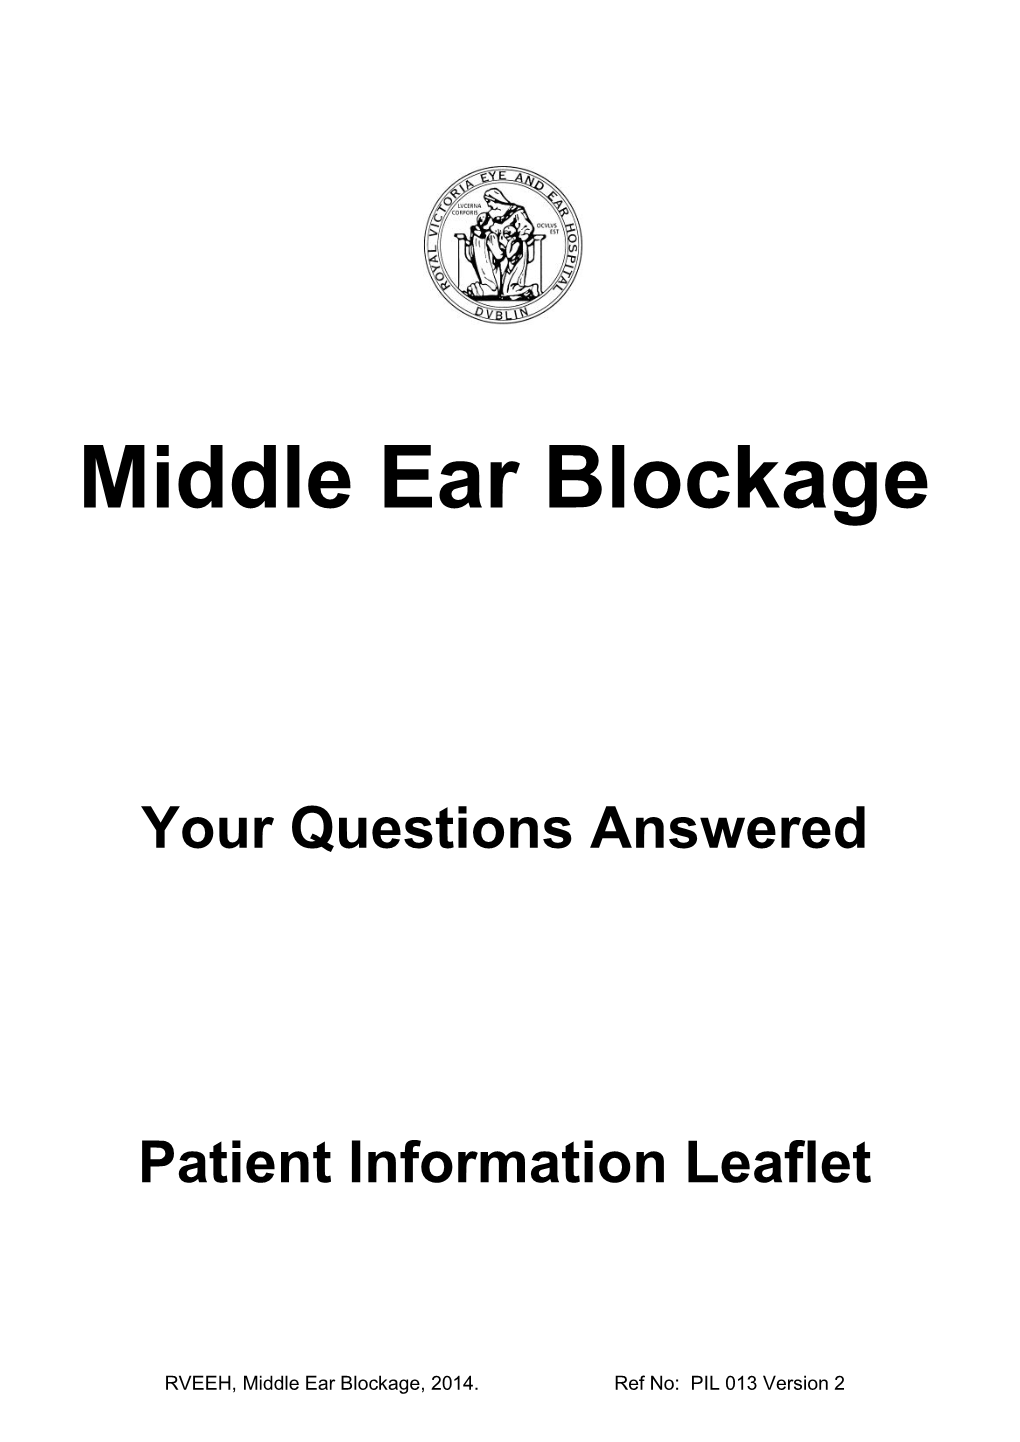 Middle Ear Blockage Patient Information Leaflet